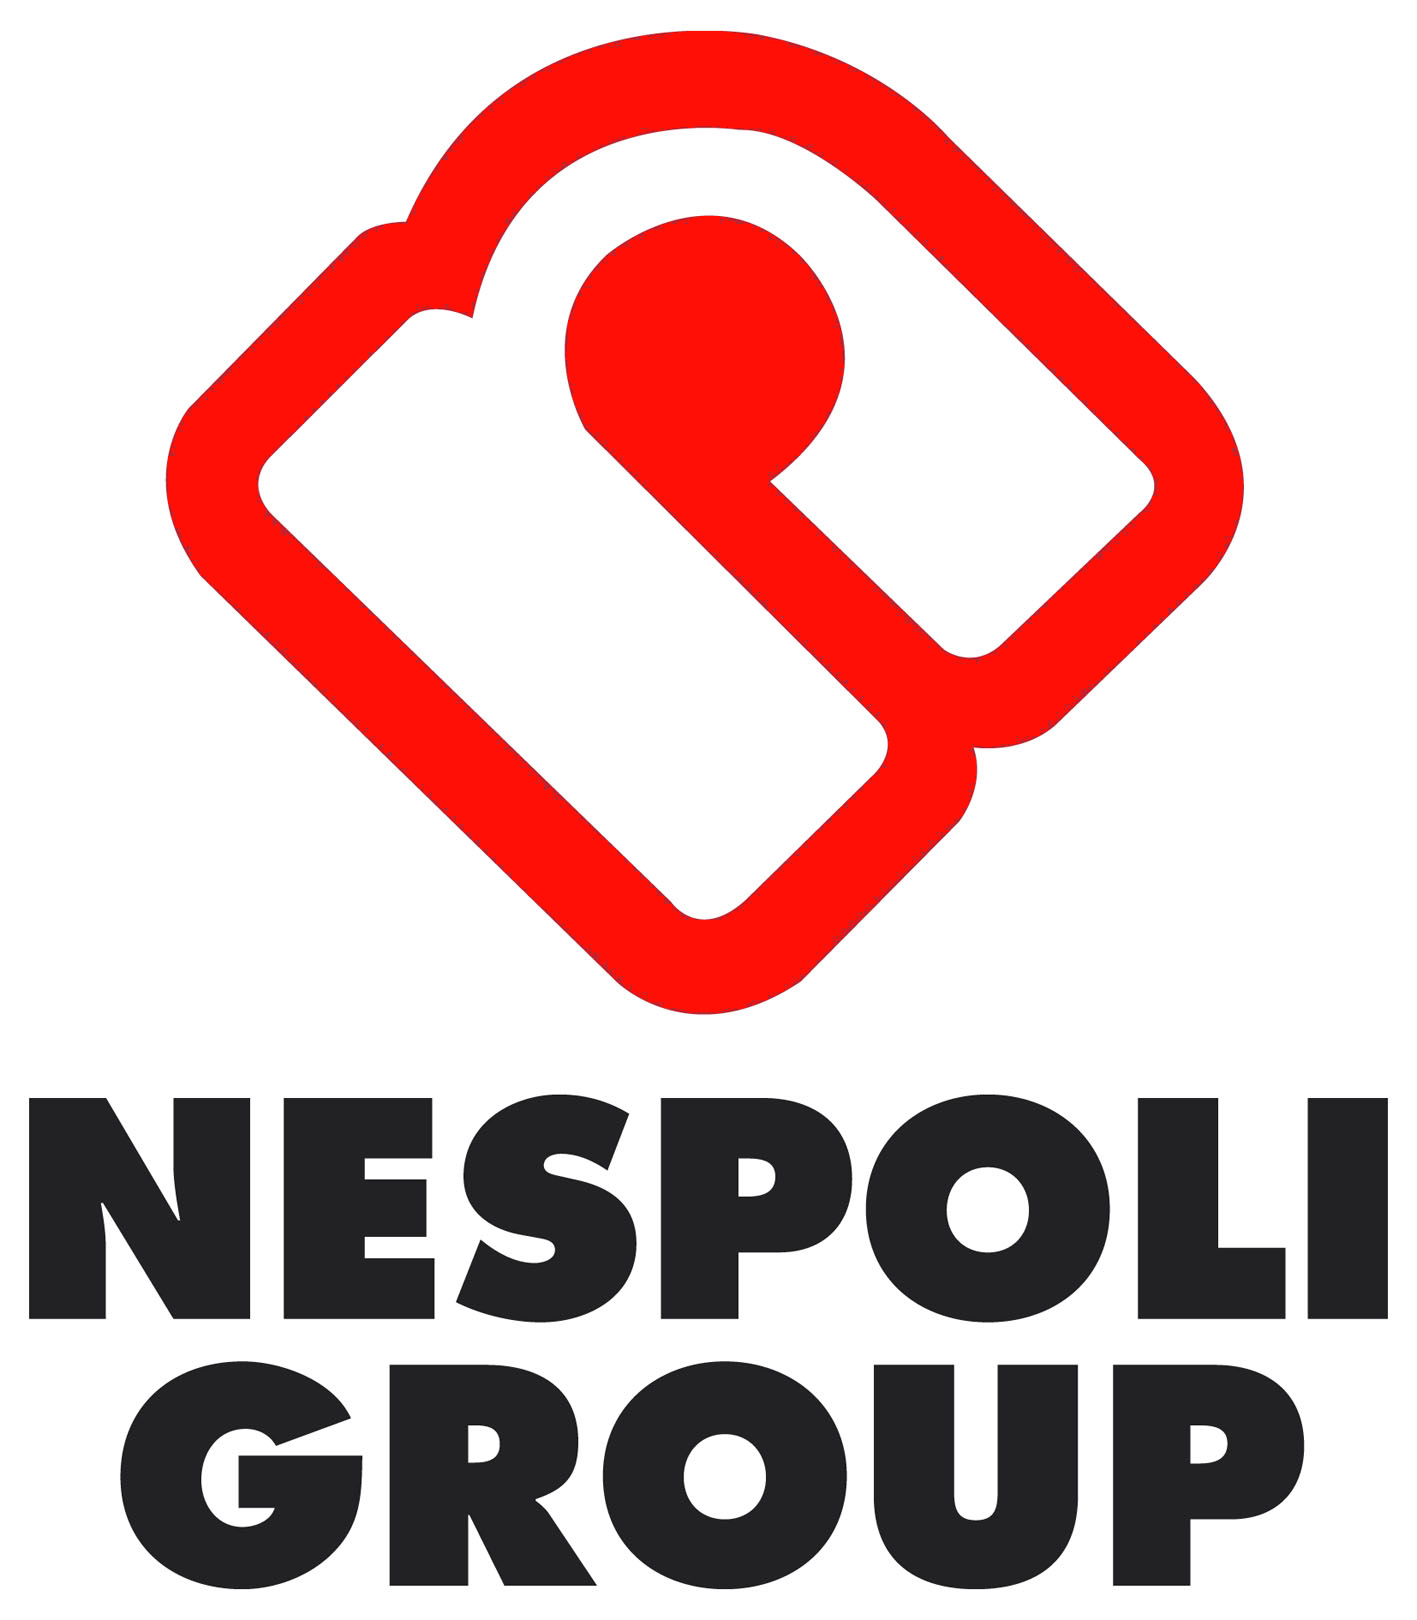 Nespoligroup logo